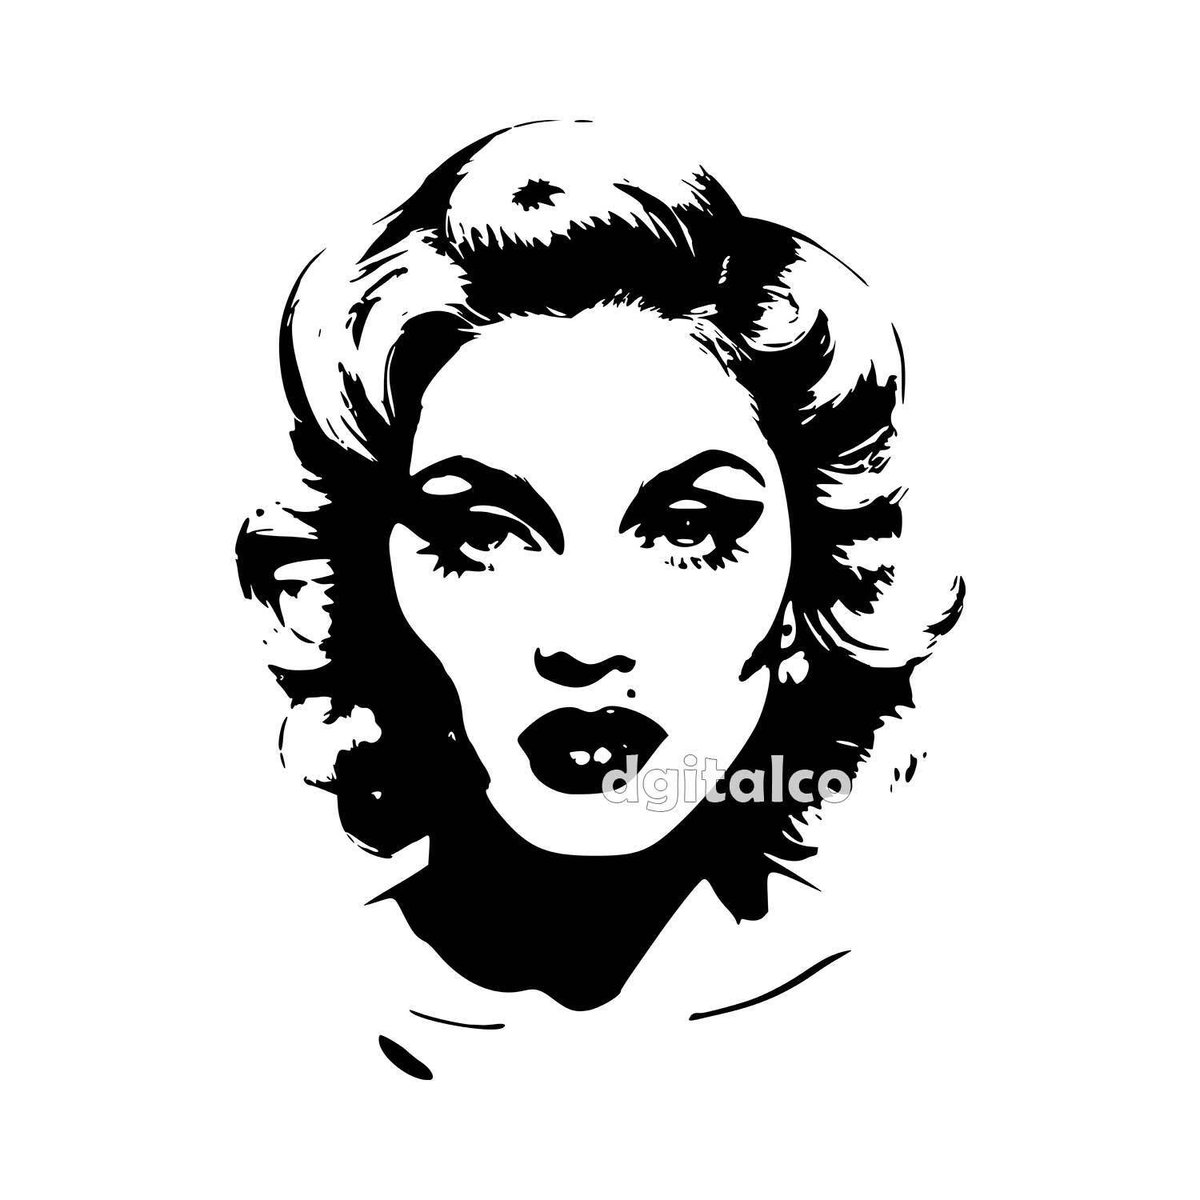 Explore Madonna's 80s allure in this iconic vector portrait! #Madonna #80sIcon #VectorArt 🎨💃 Zip: Svg, Eps, Ai, Png, Pdf, Jpeg 📥💻 link in bio 👈🔗